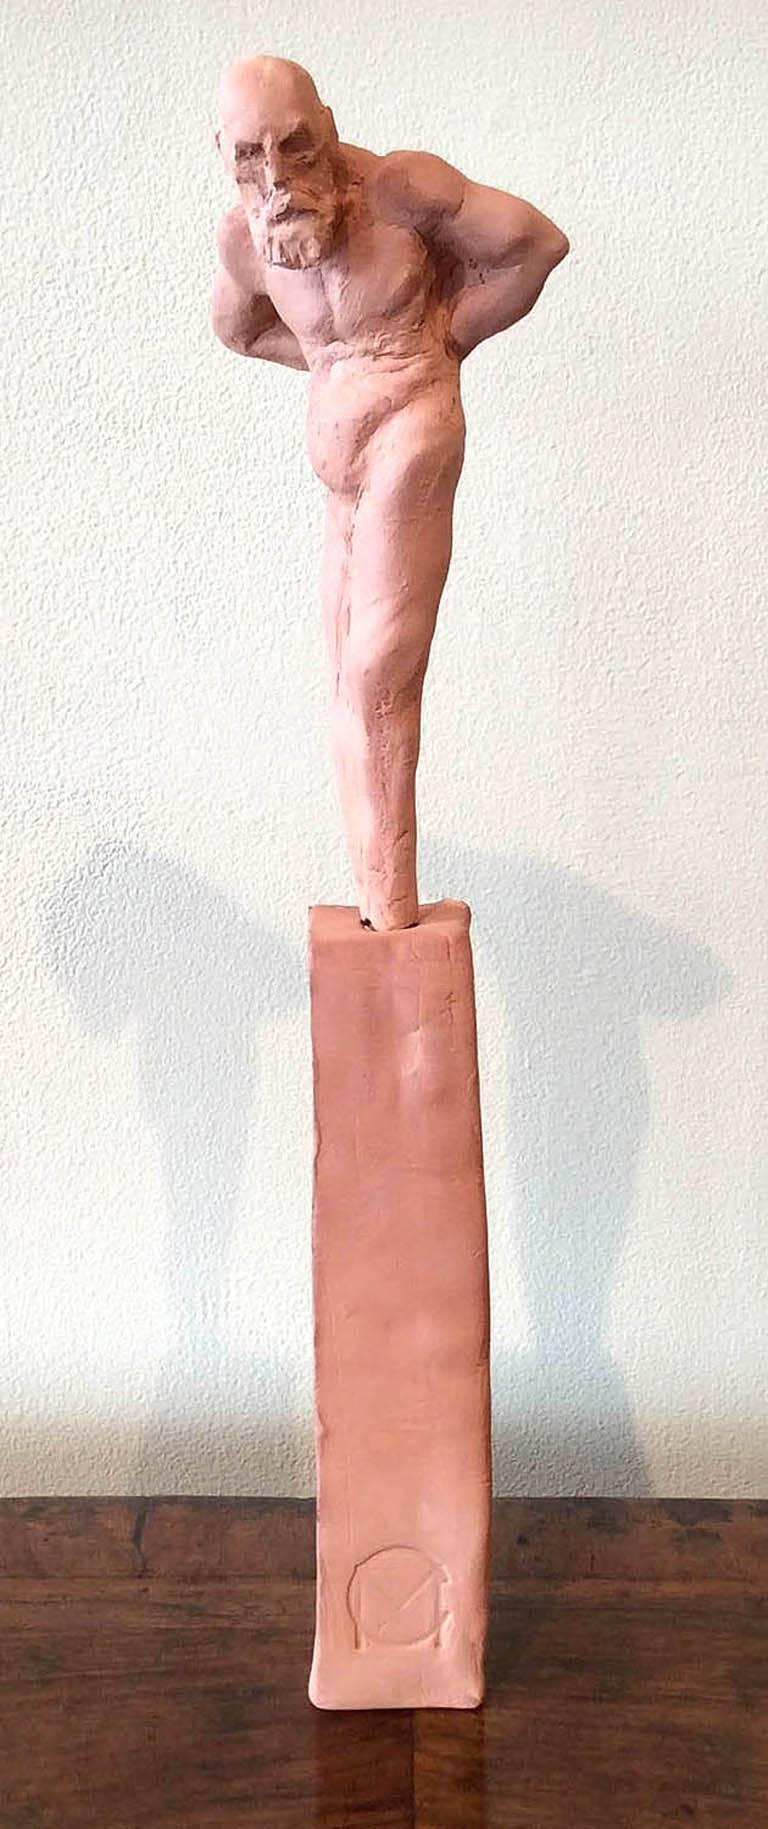 Christian Mizon Nude Sculpture - The Old Man